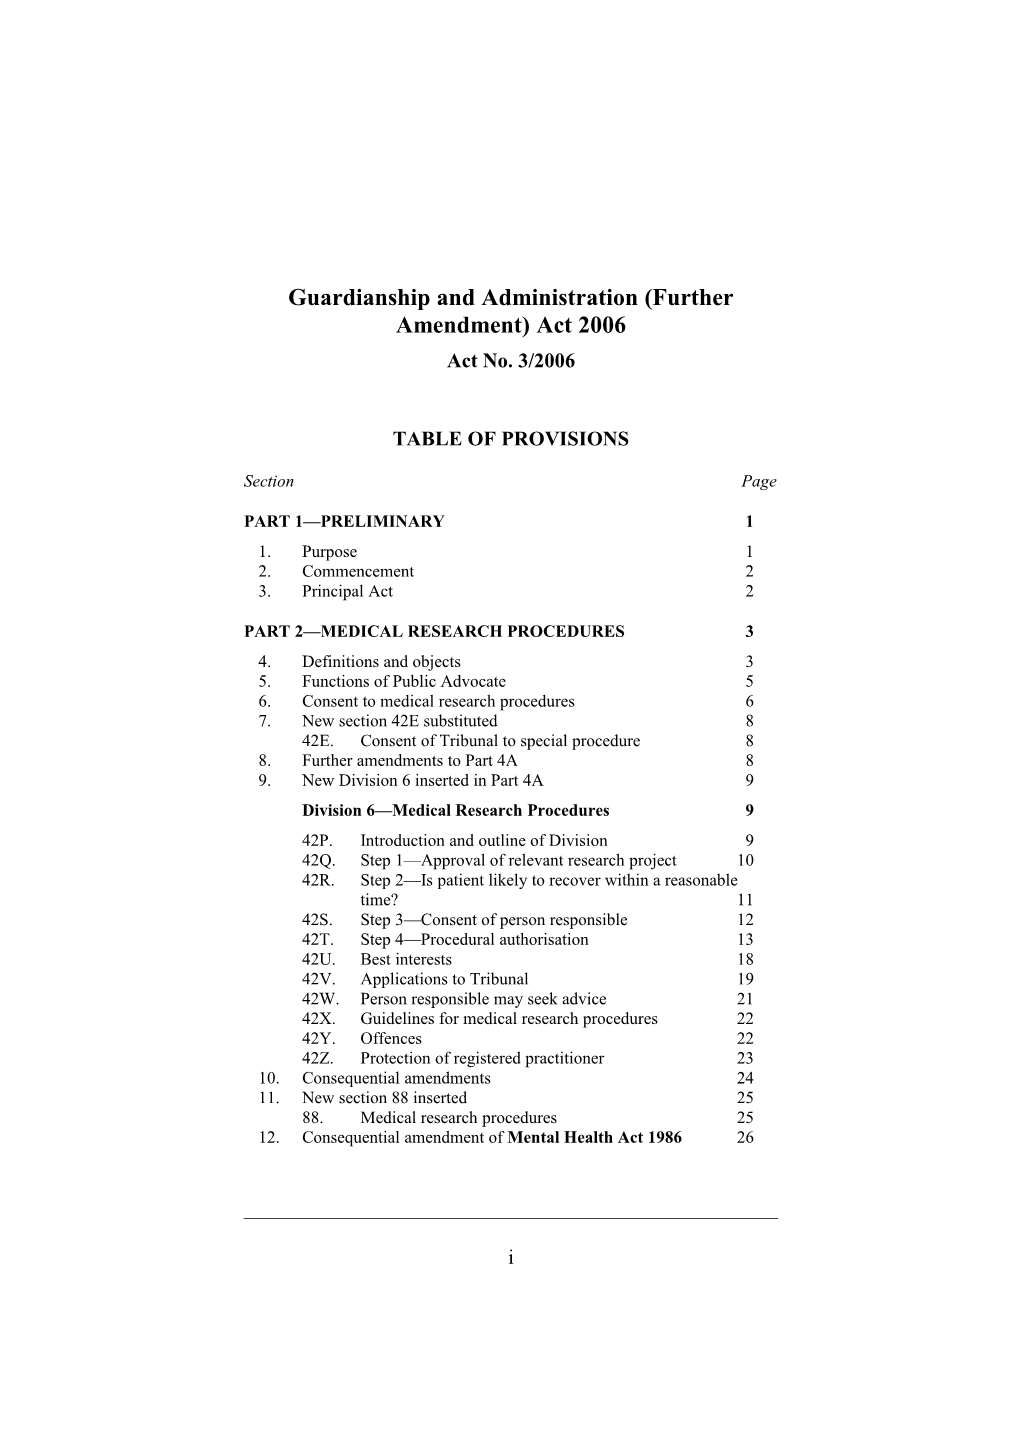 Guardianship and Administration (Further Amendment) Act 2006